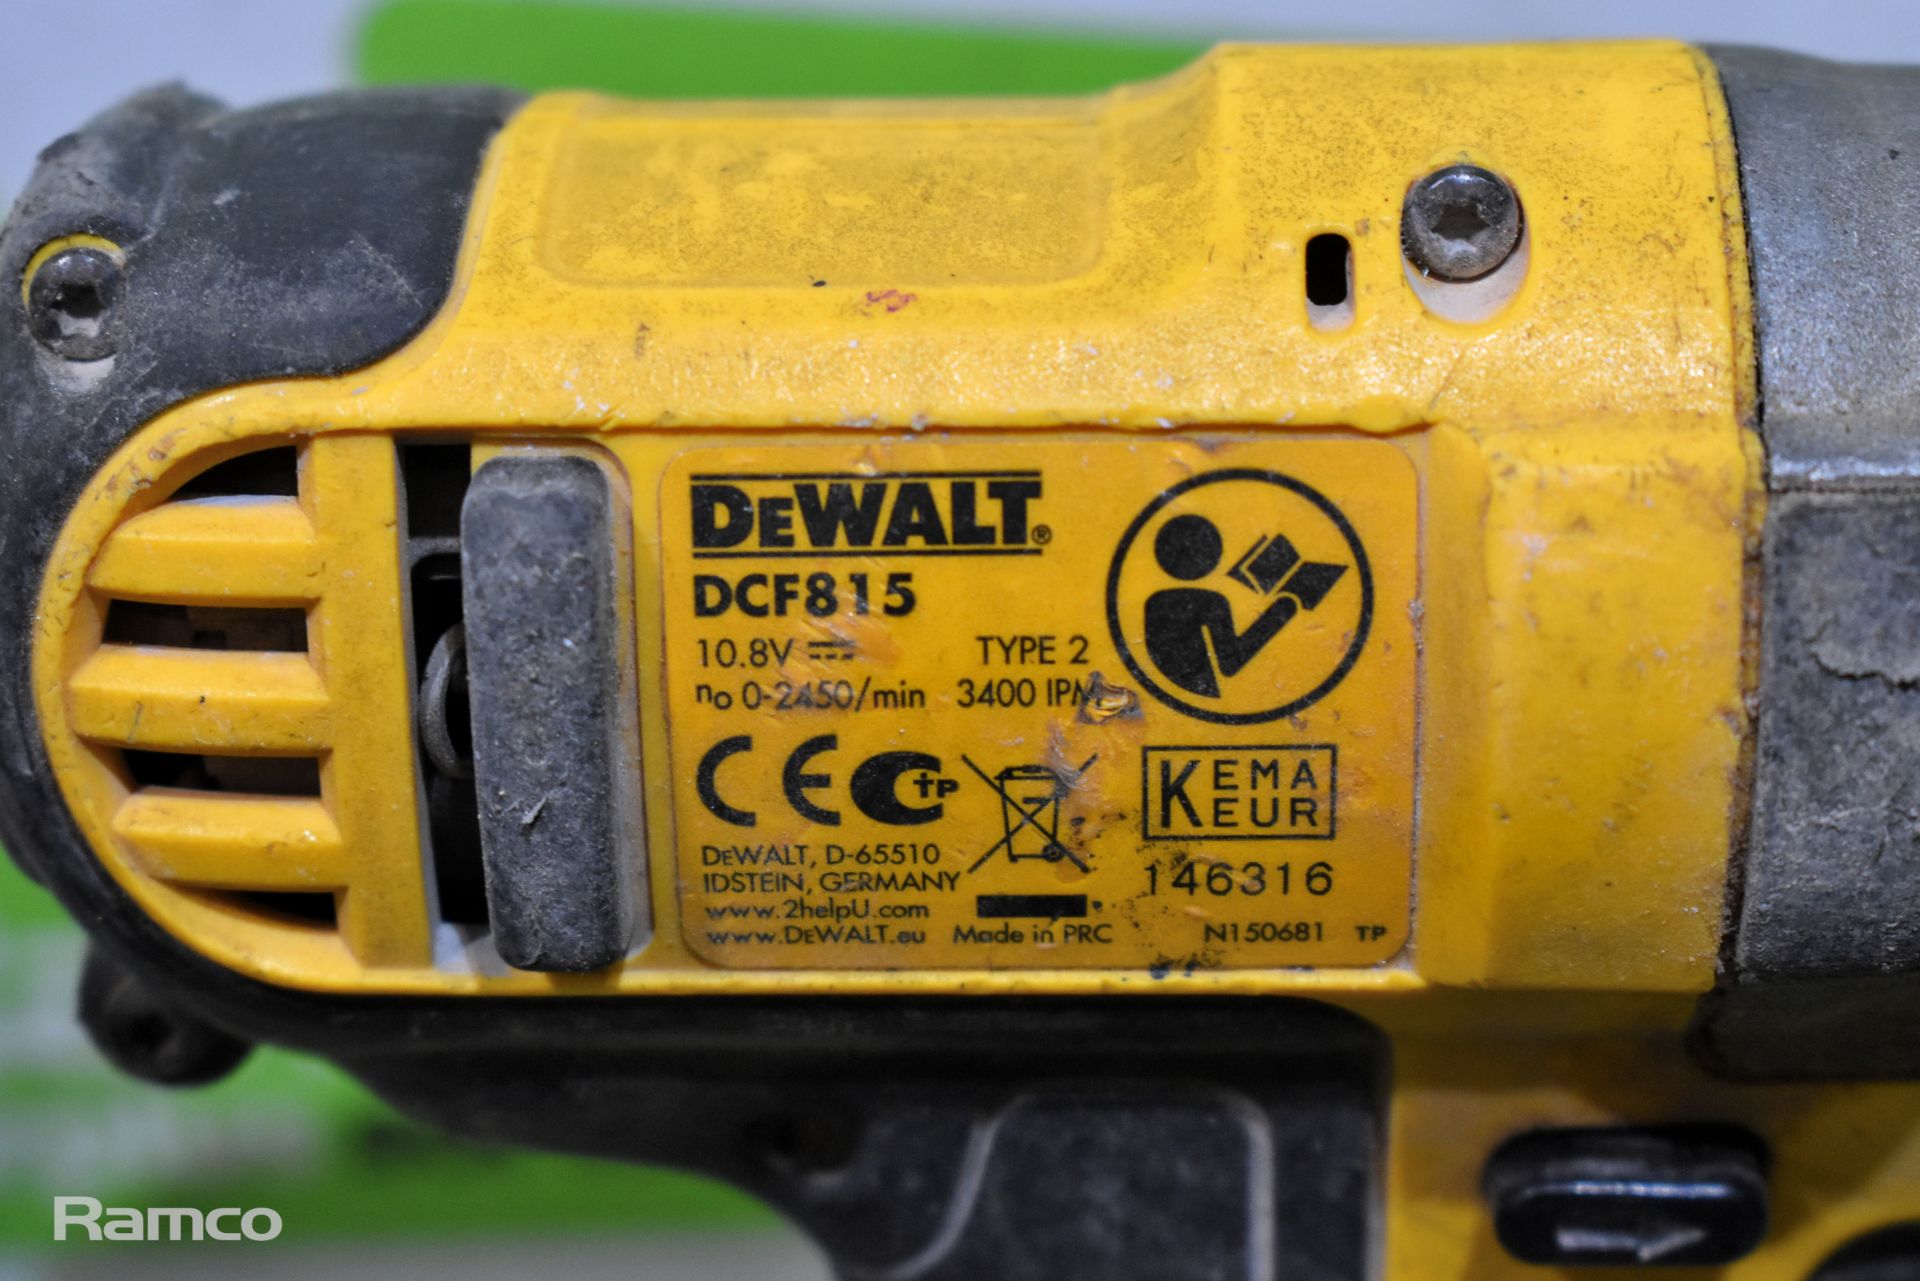 3x Dewalt drills - DCF815, CD785, DCD778 and charger with bag - NO BATTERIES - Bild 4 aus 9